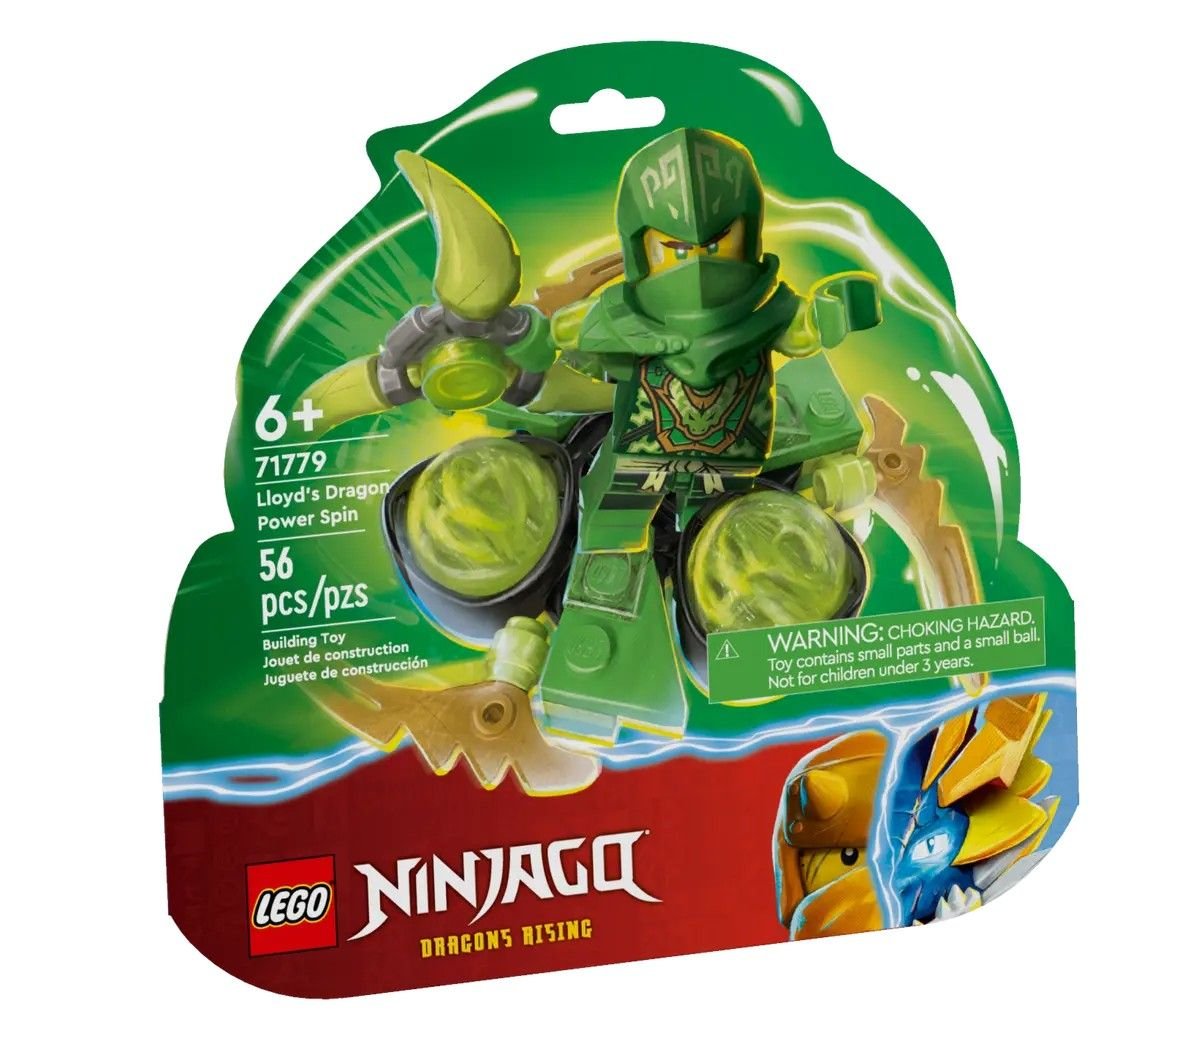 Lloyd's Dragon Power Spinjitzu Spin LEGO NINJAGO 71779